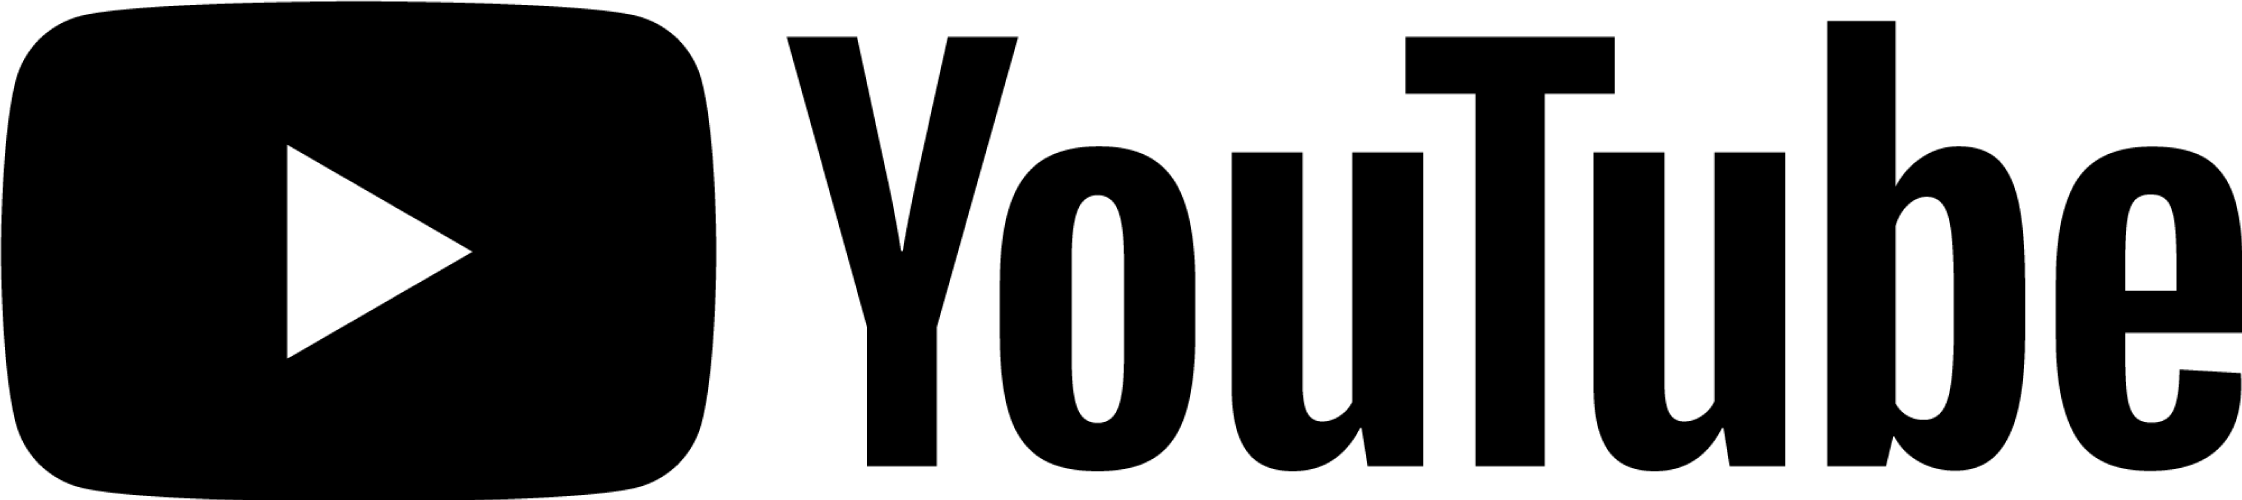 black youtube logo png